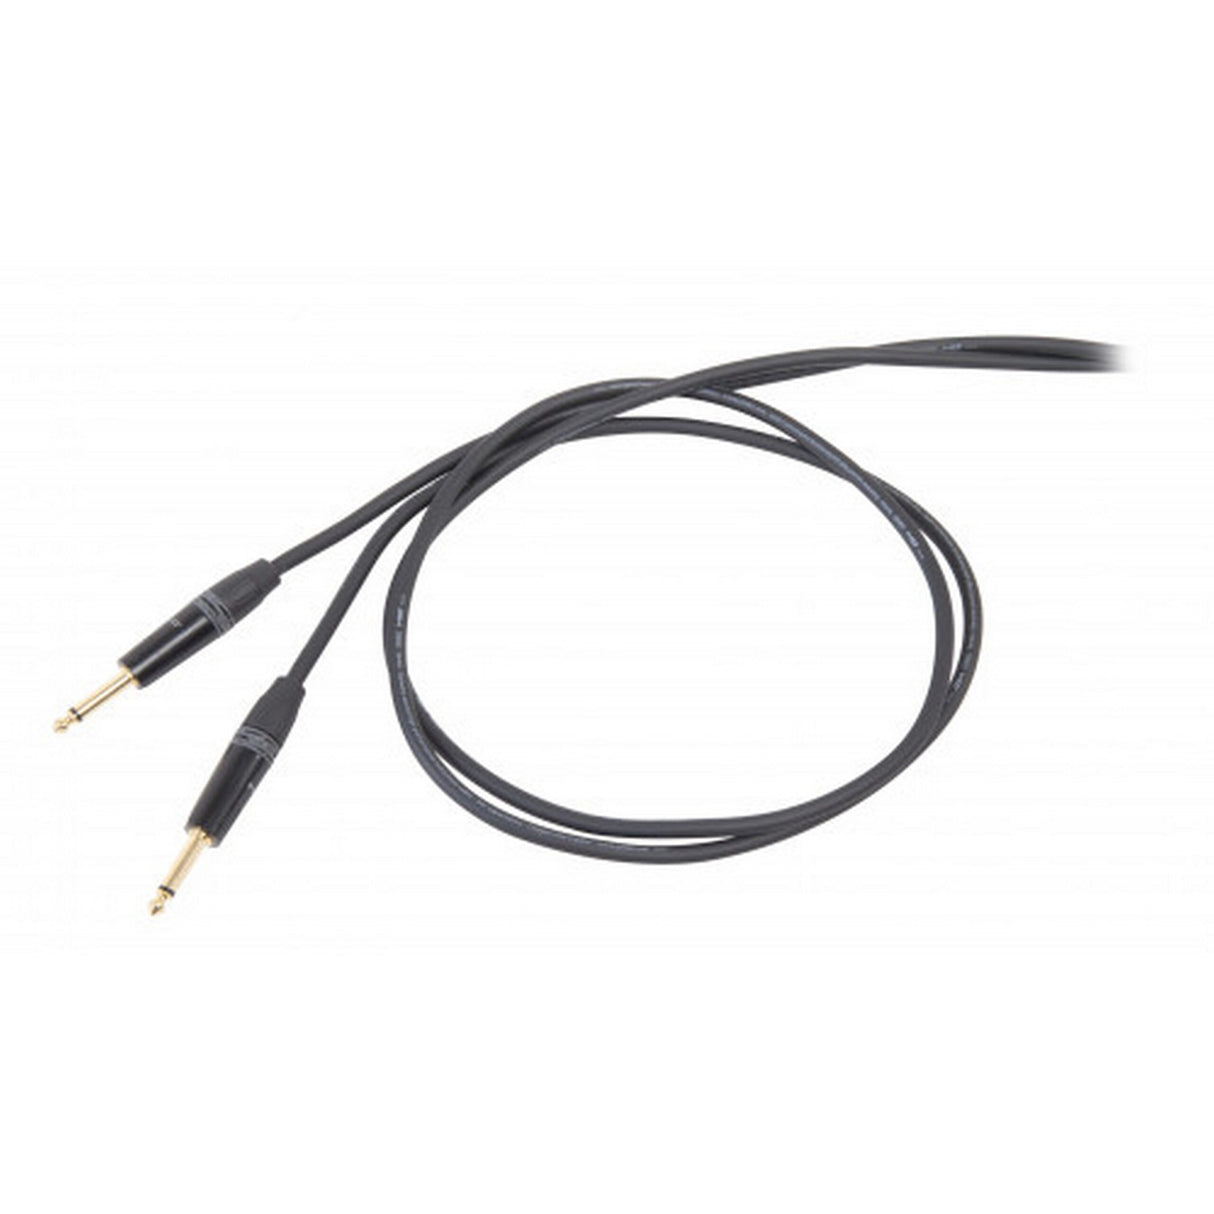 DieHard DHS100LU10 ONEHERO Professional Instrument Cable, 10 m